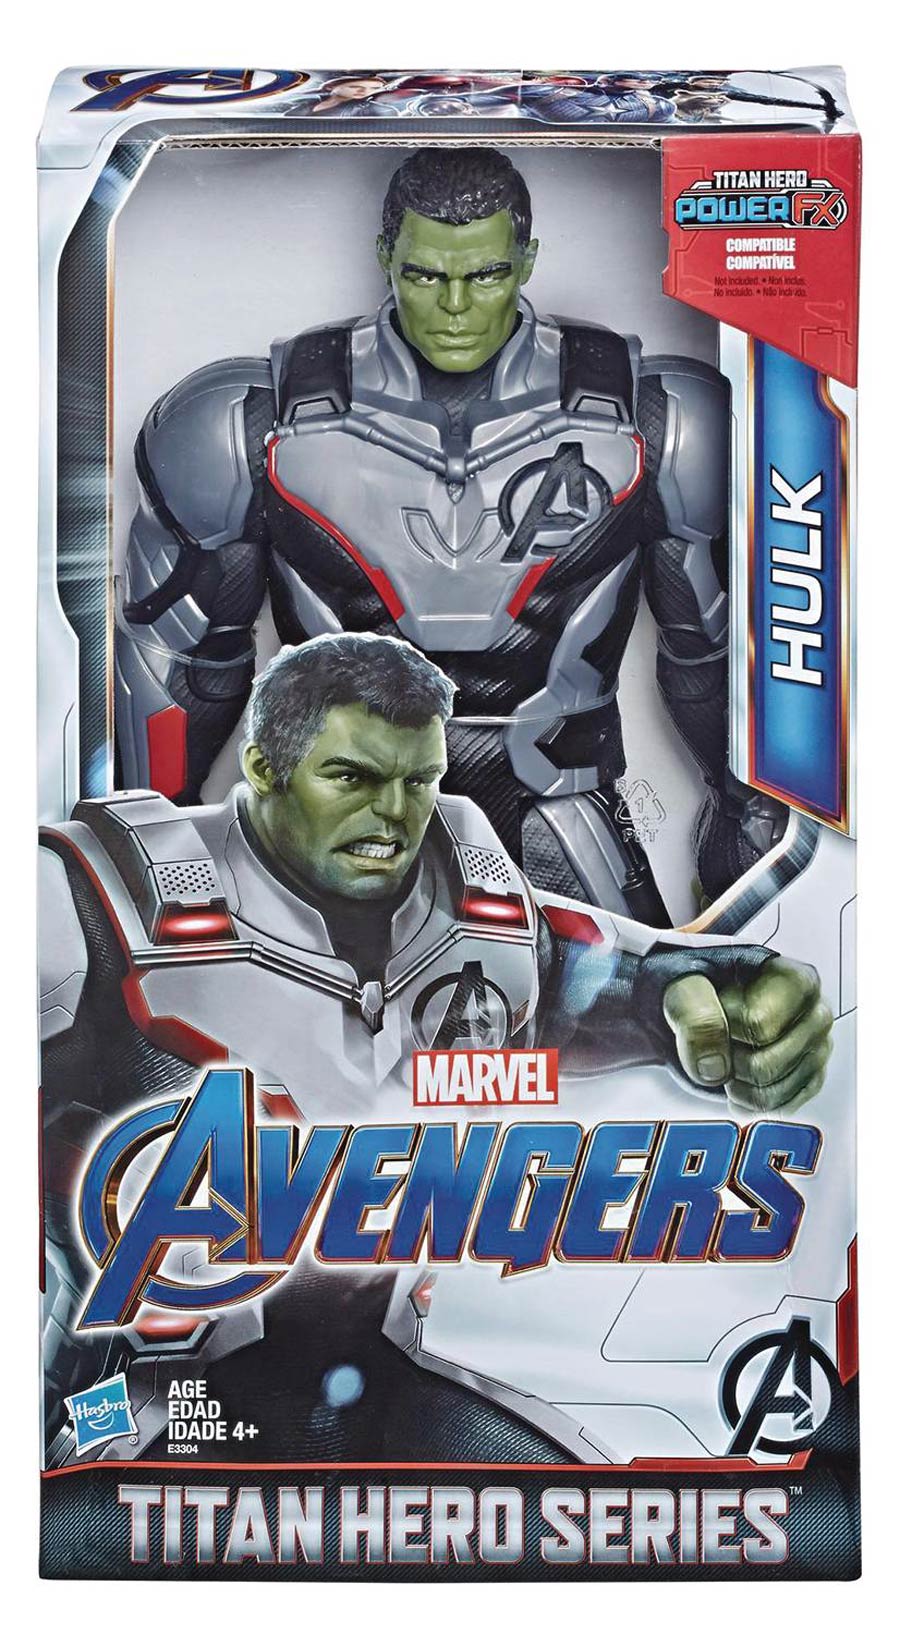 Avengers Endgame 12-Inch Titan Hero Deluxe Hulk Version 2 Action Figure Case